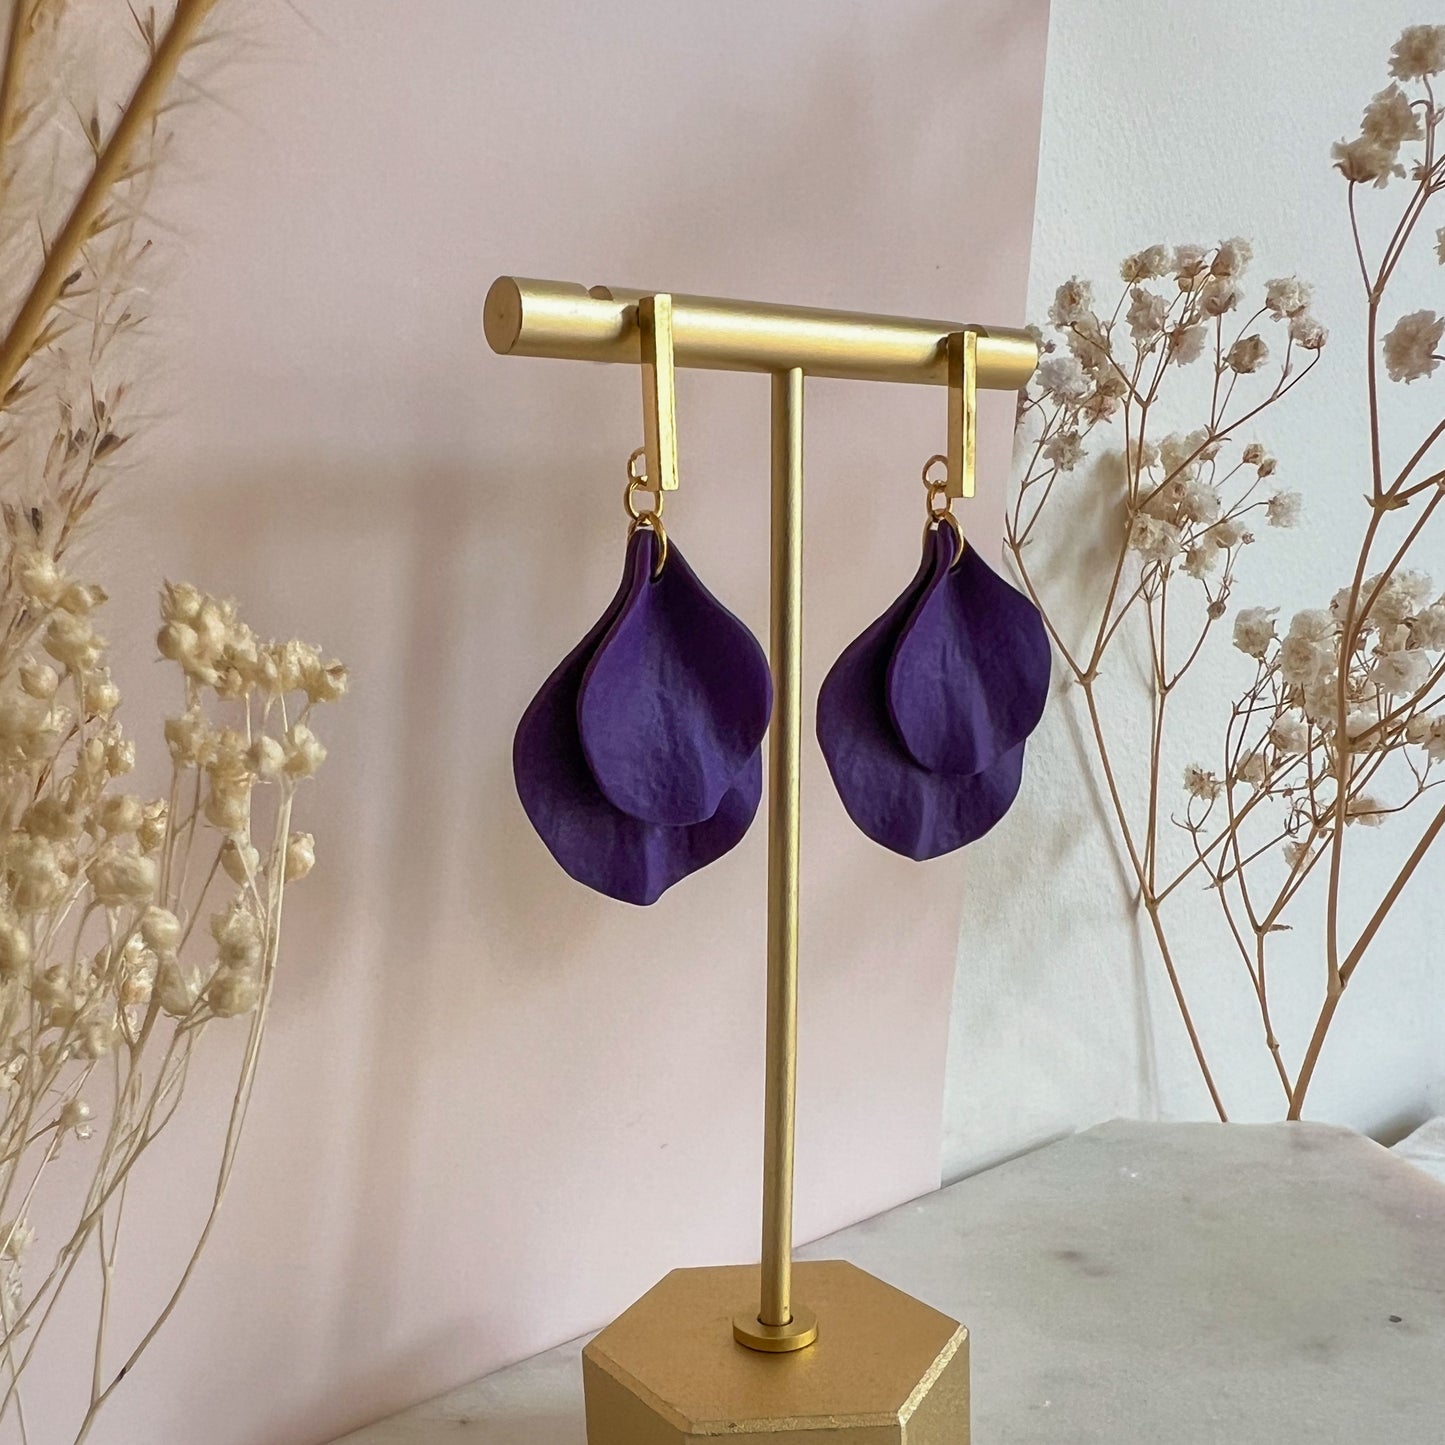 DELEN STEM | medium double rose petal earrings on straight stud drop in violet purple